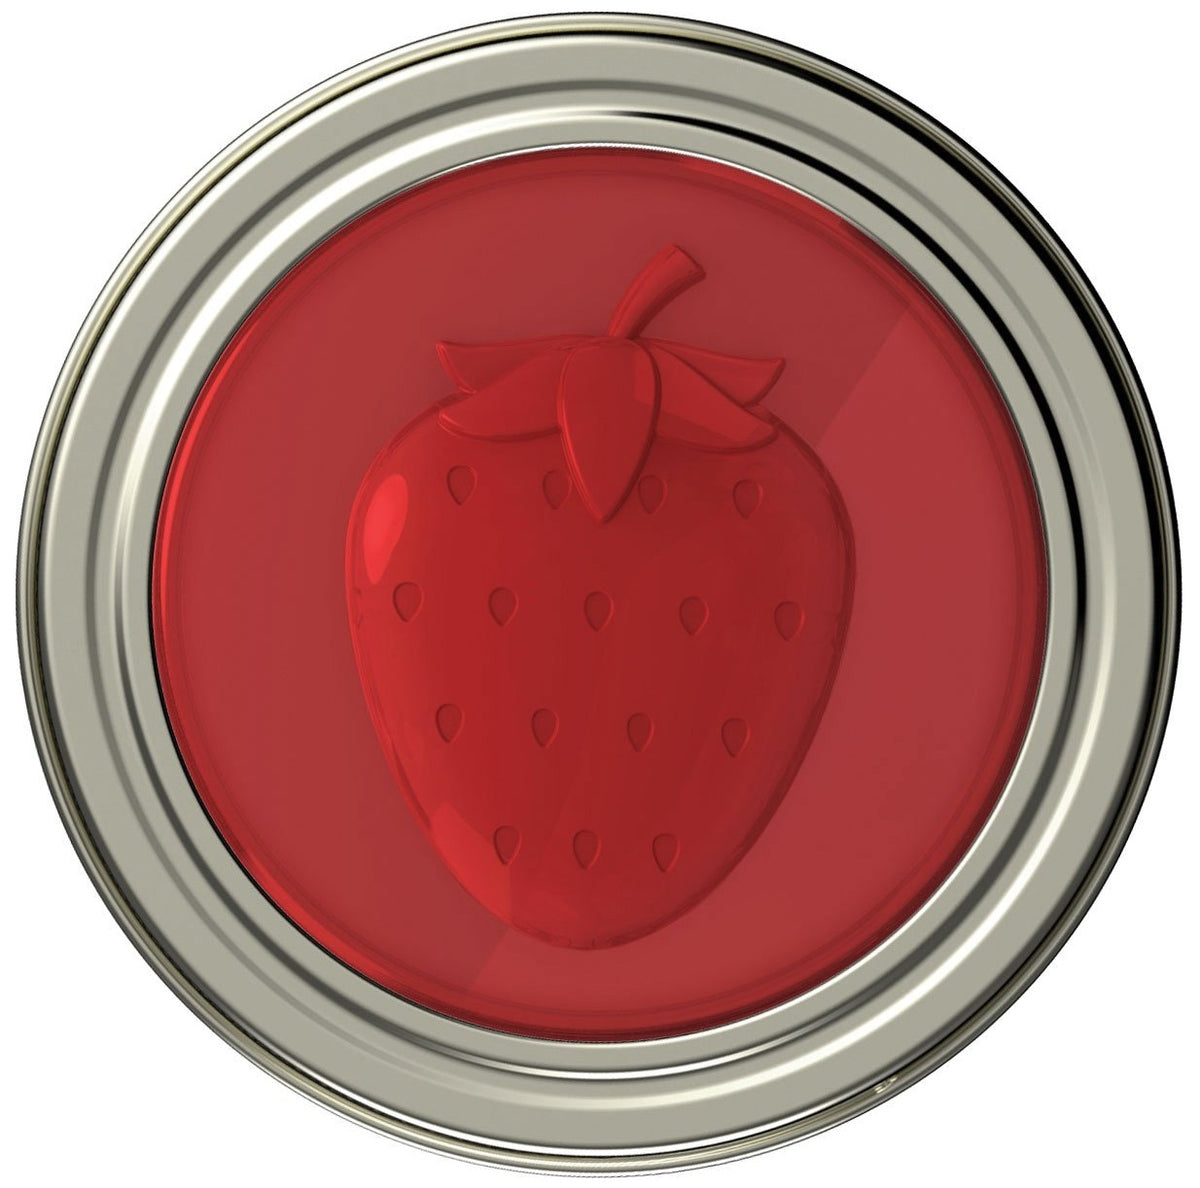 Jarware 82633 Starwberry Jelly/Jam Decorative Jar Lid, Regular Mouth